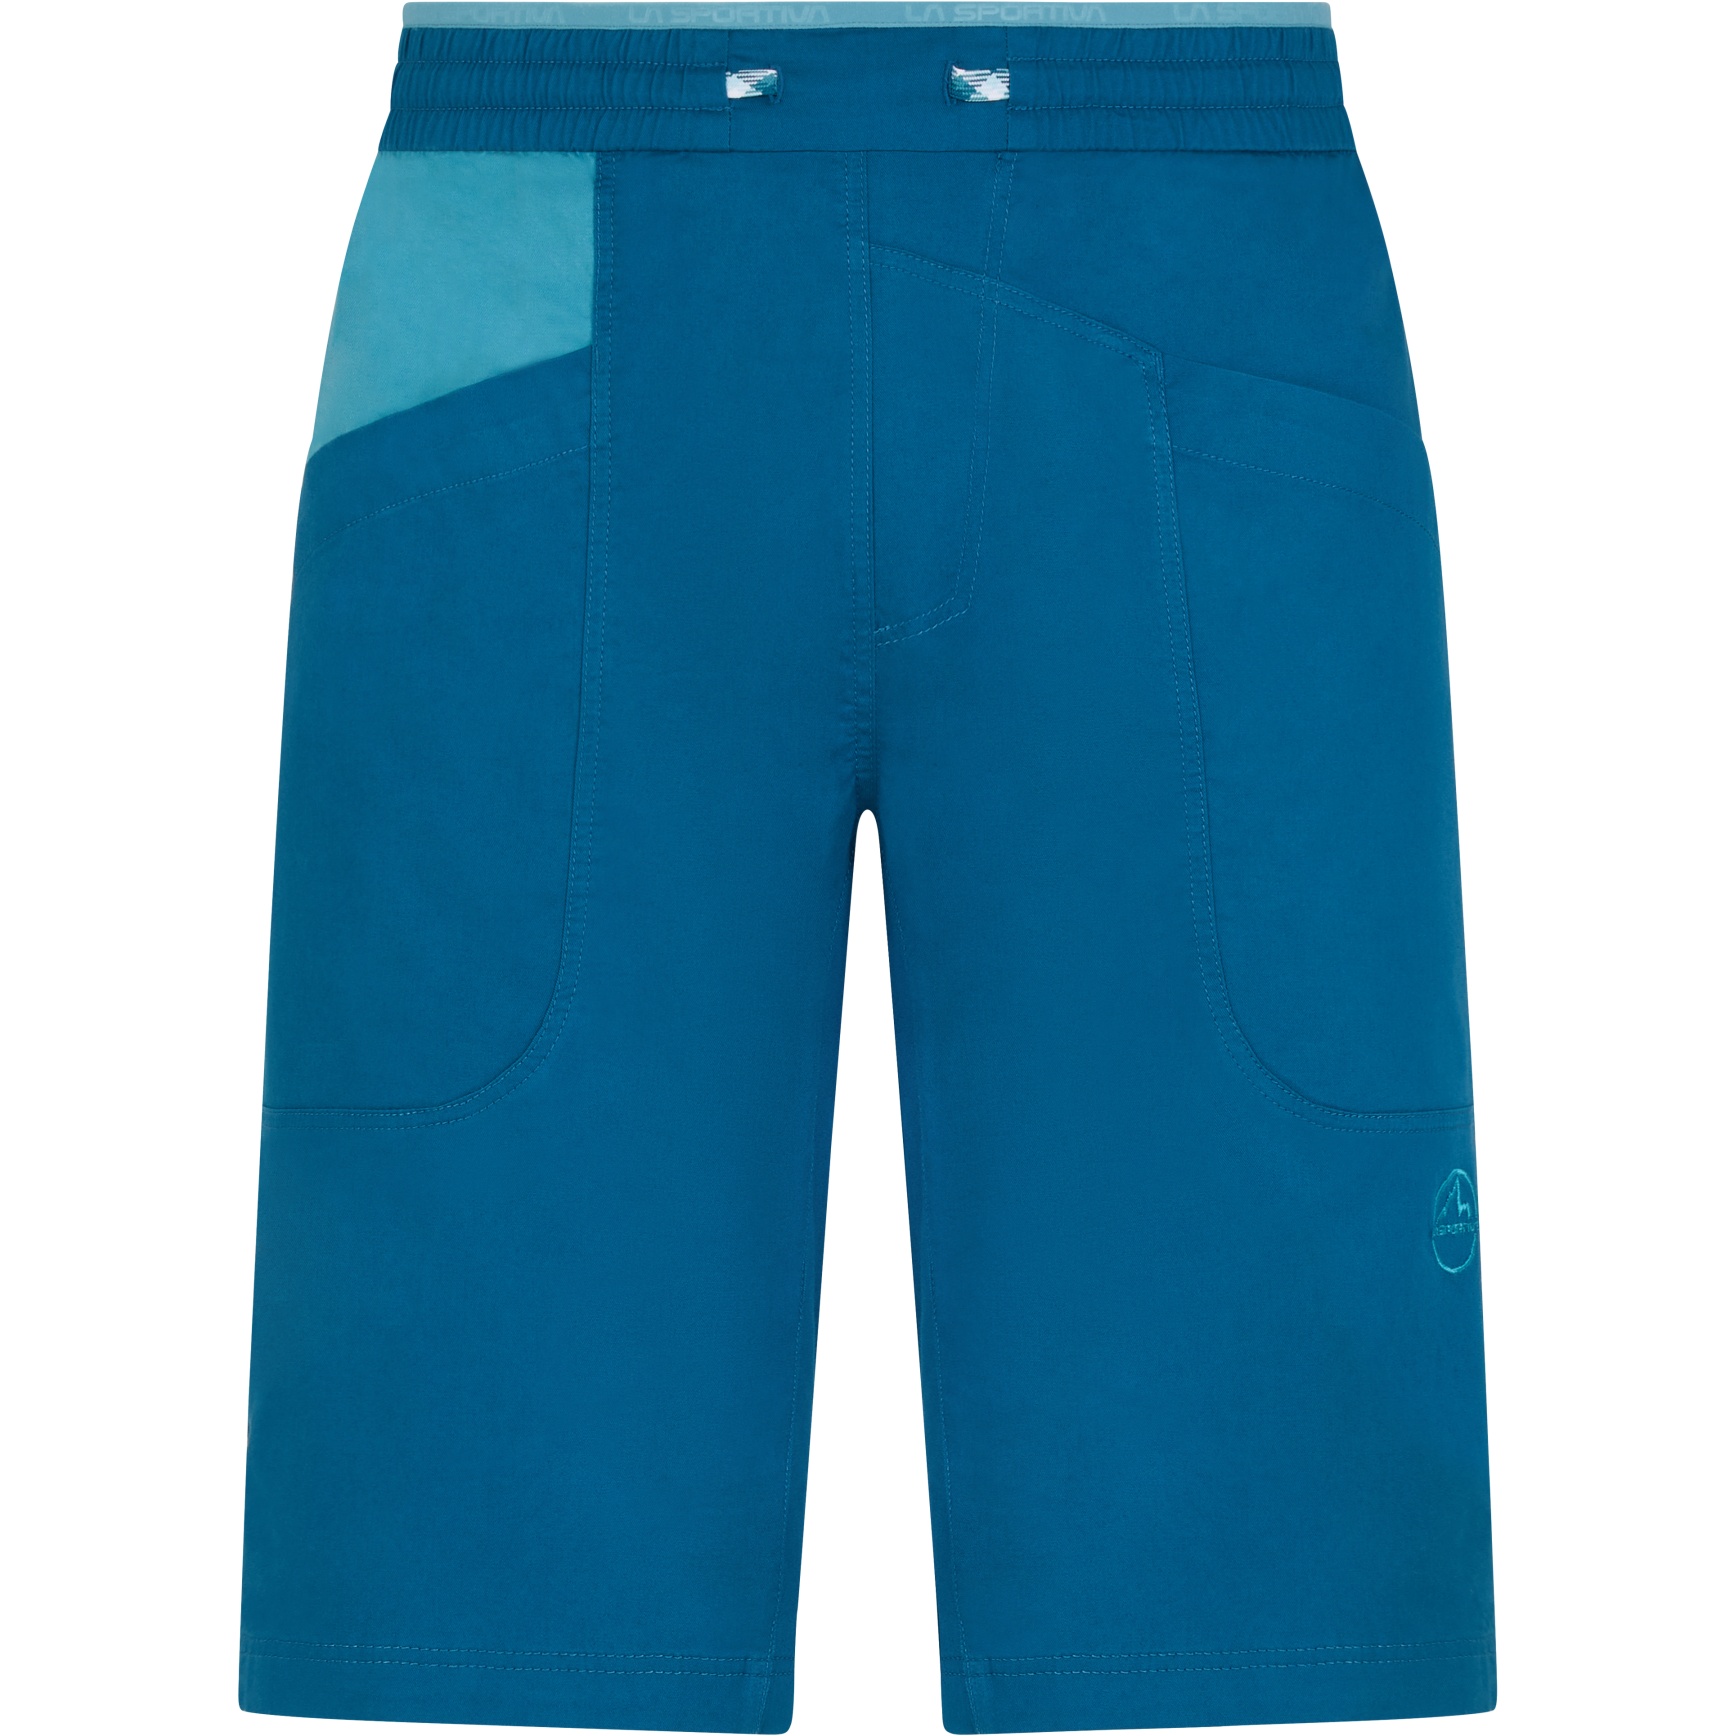 Image of La Sportiva Bleauser Shorts - Space Blue/Topaz